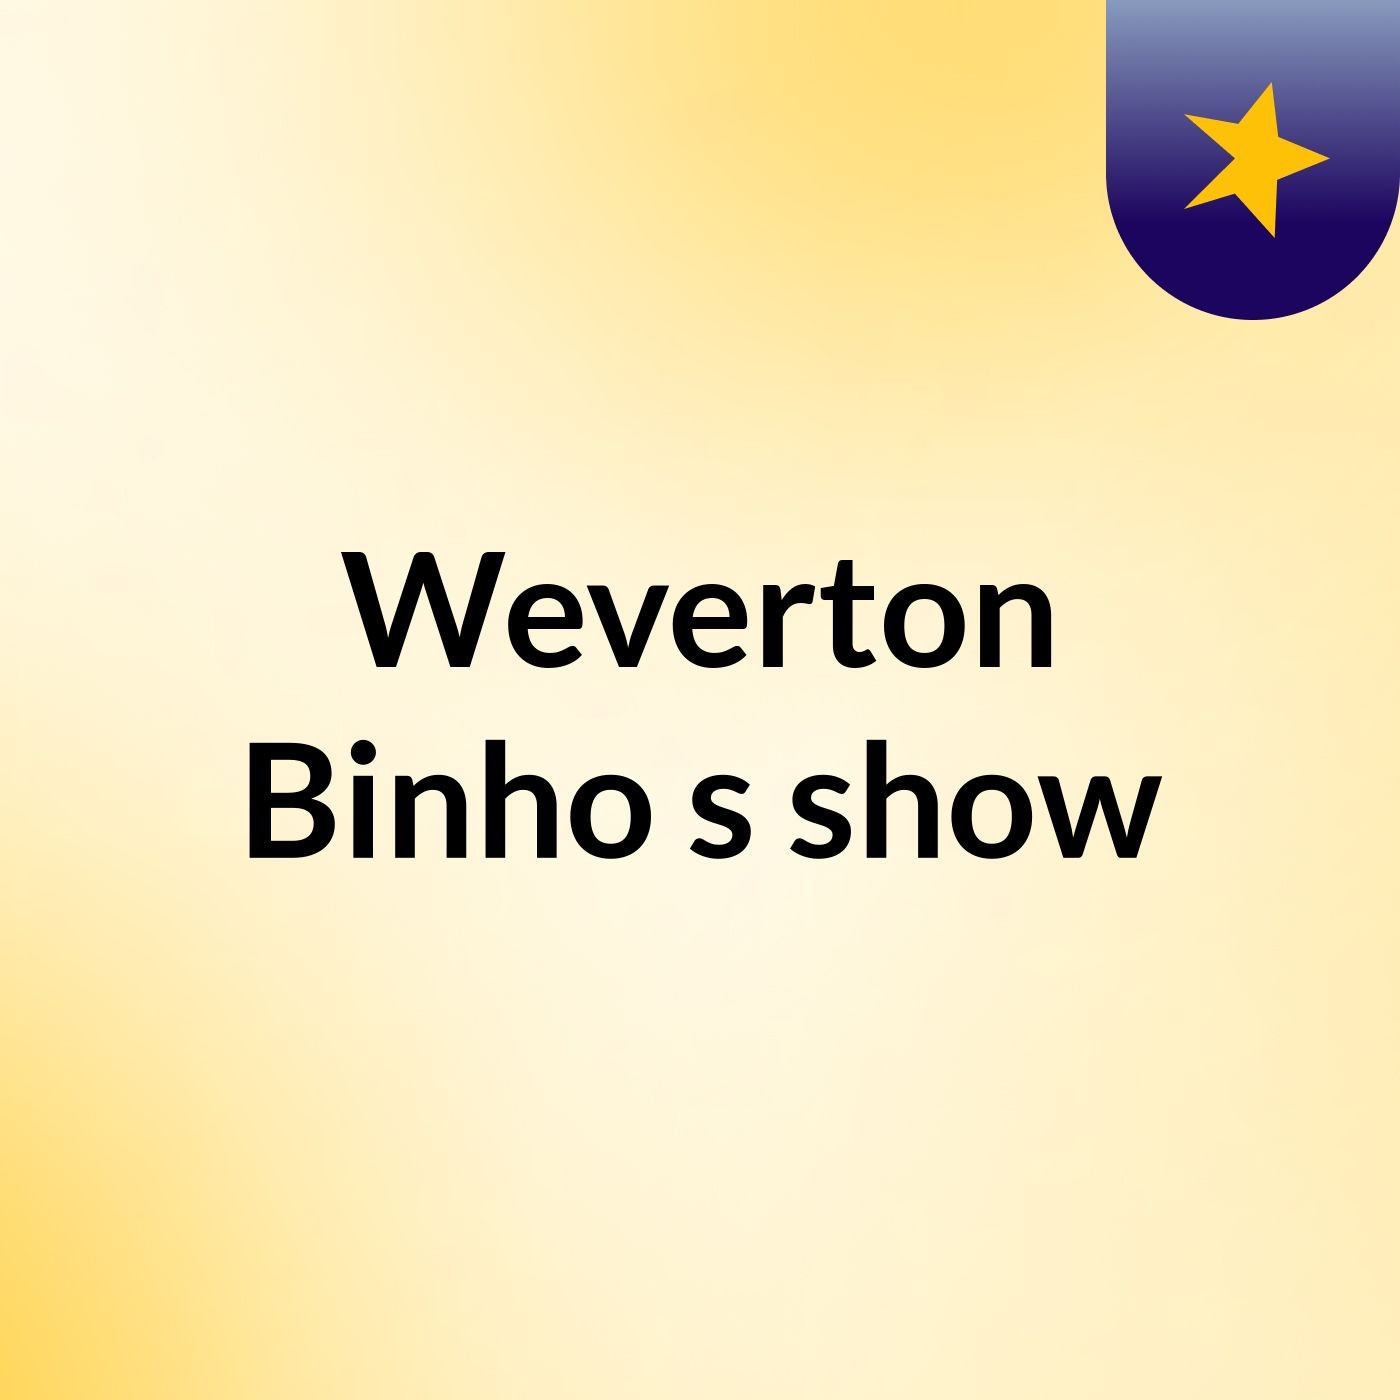 Weverton Binho's show